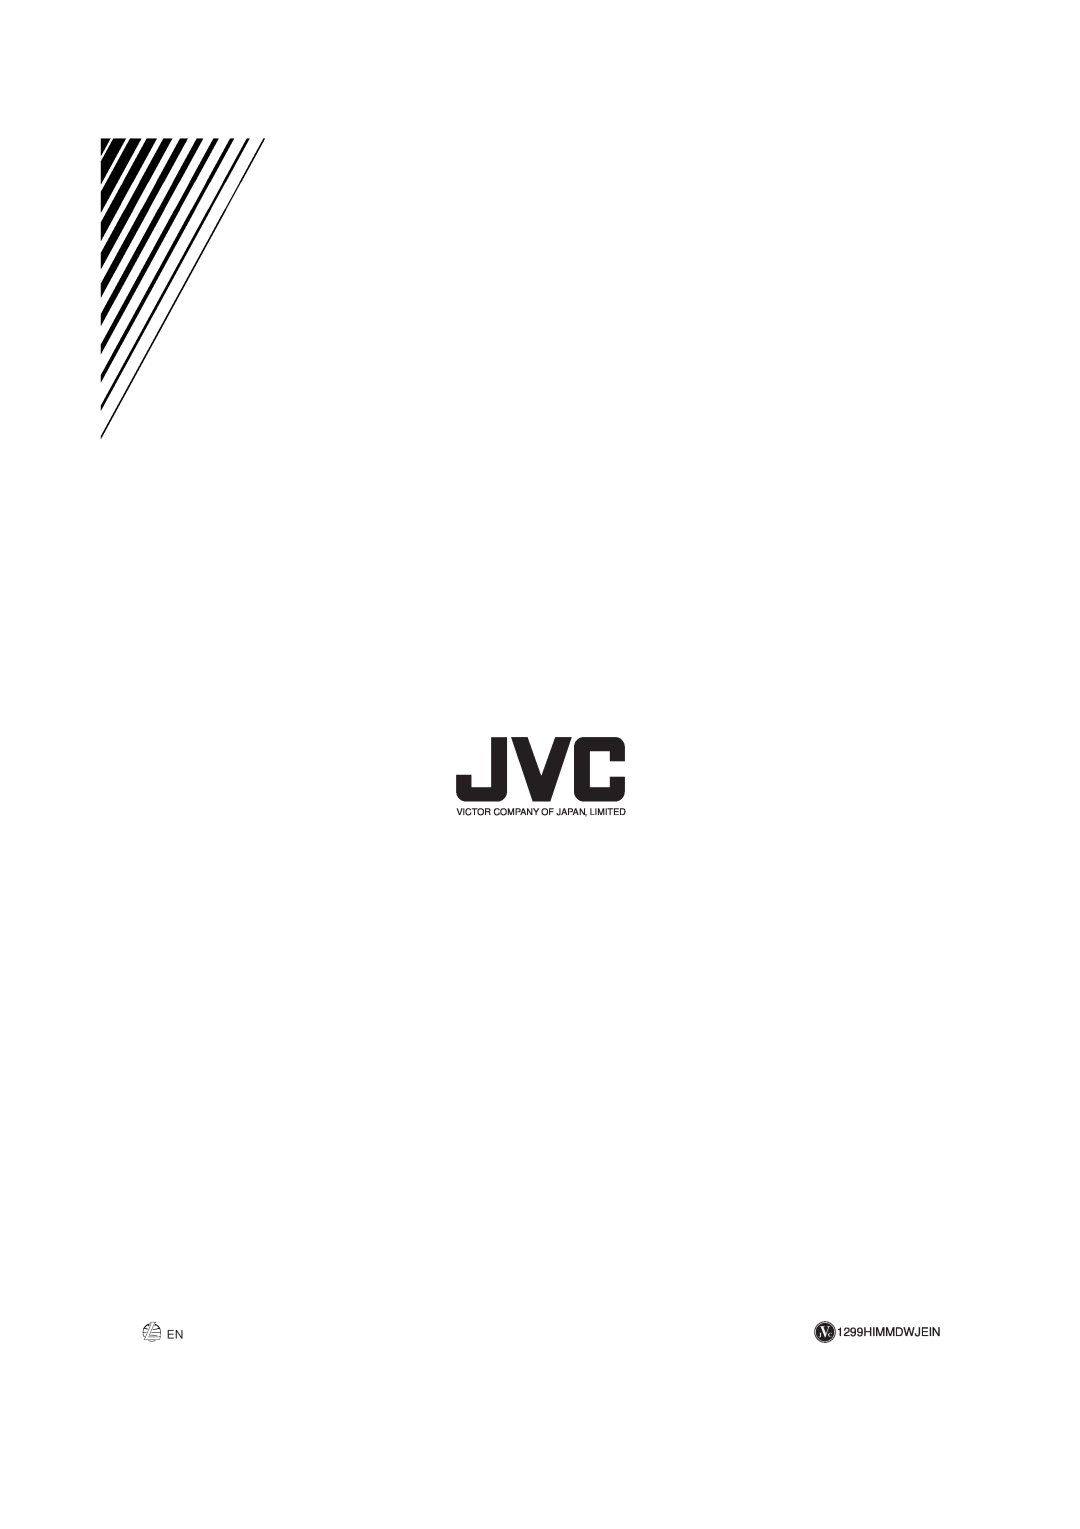 JVC RX-6500VBK manual J C 1299HIMMDWJEIN, Victor Company Of Japan, Limited 